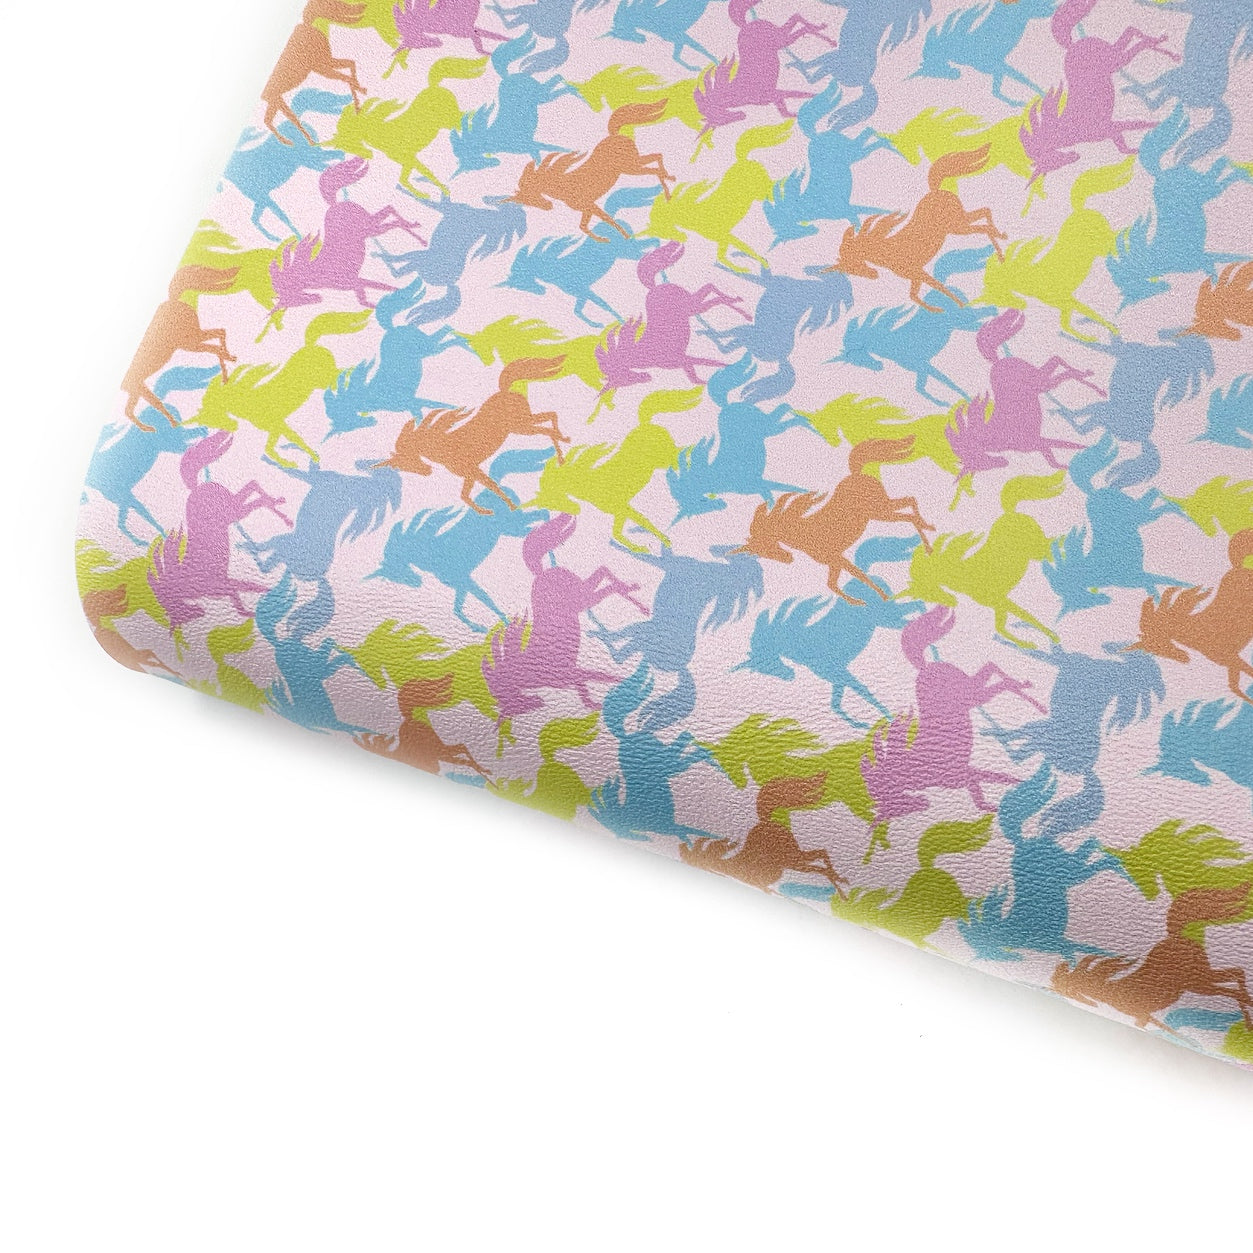 Chasing Unicorns Premium Faux Leather Fabric Sheets